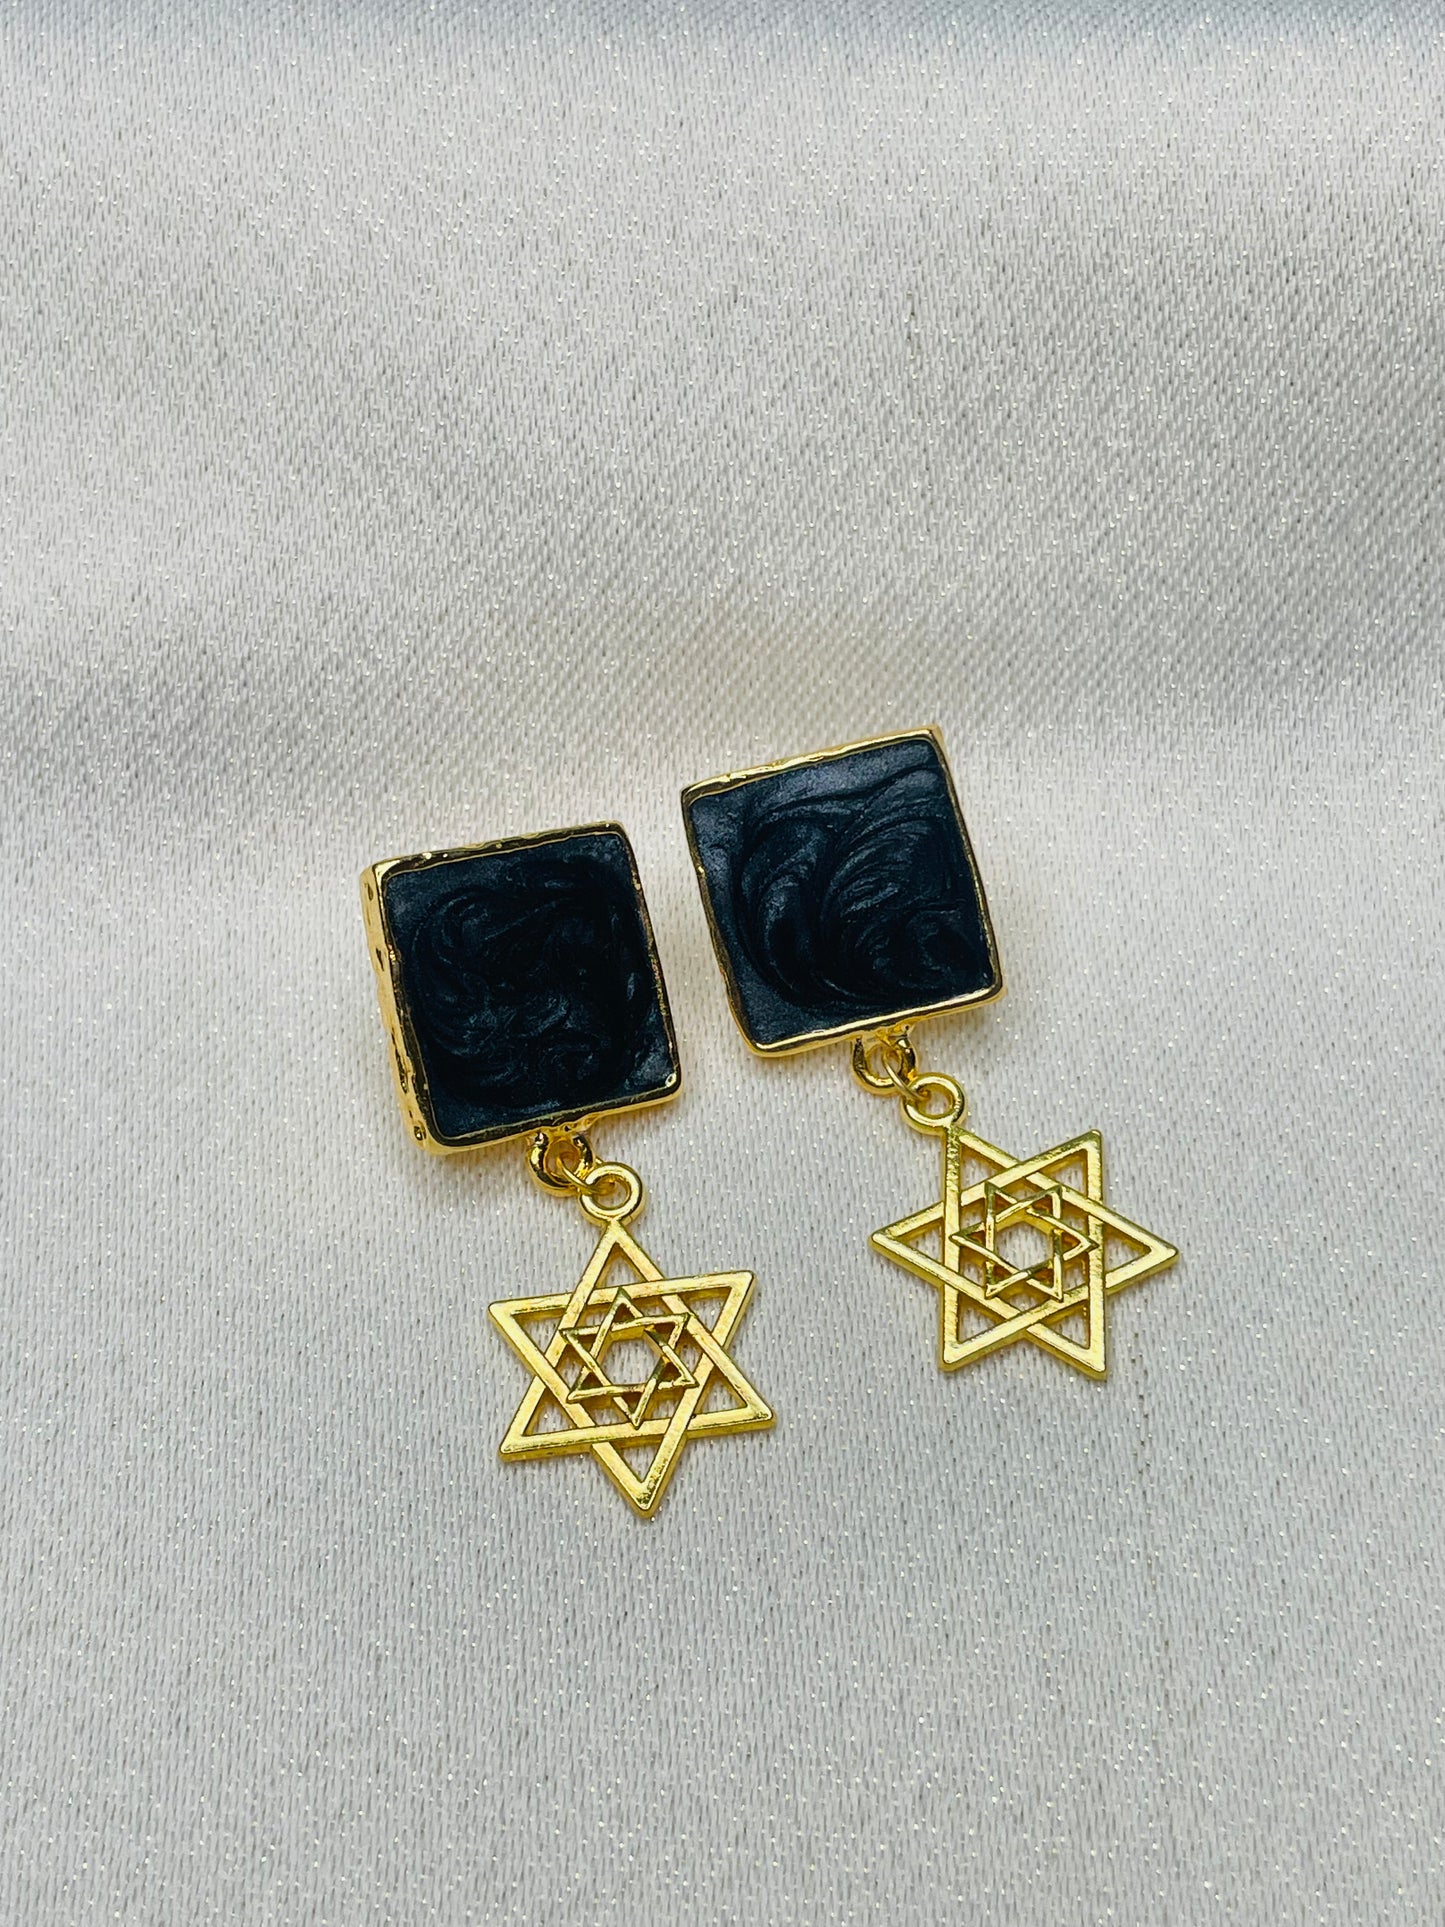 Gold Gem Stone Jewish Star Earrings